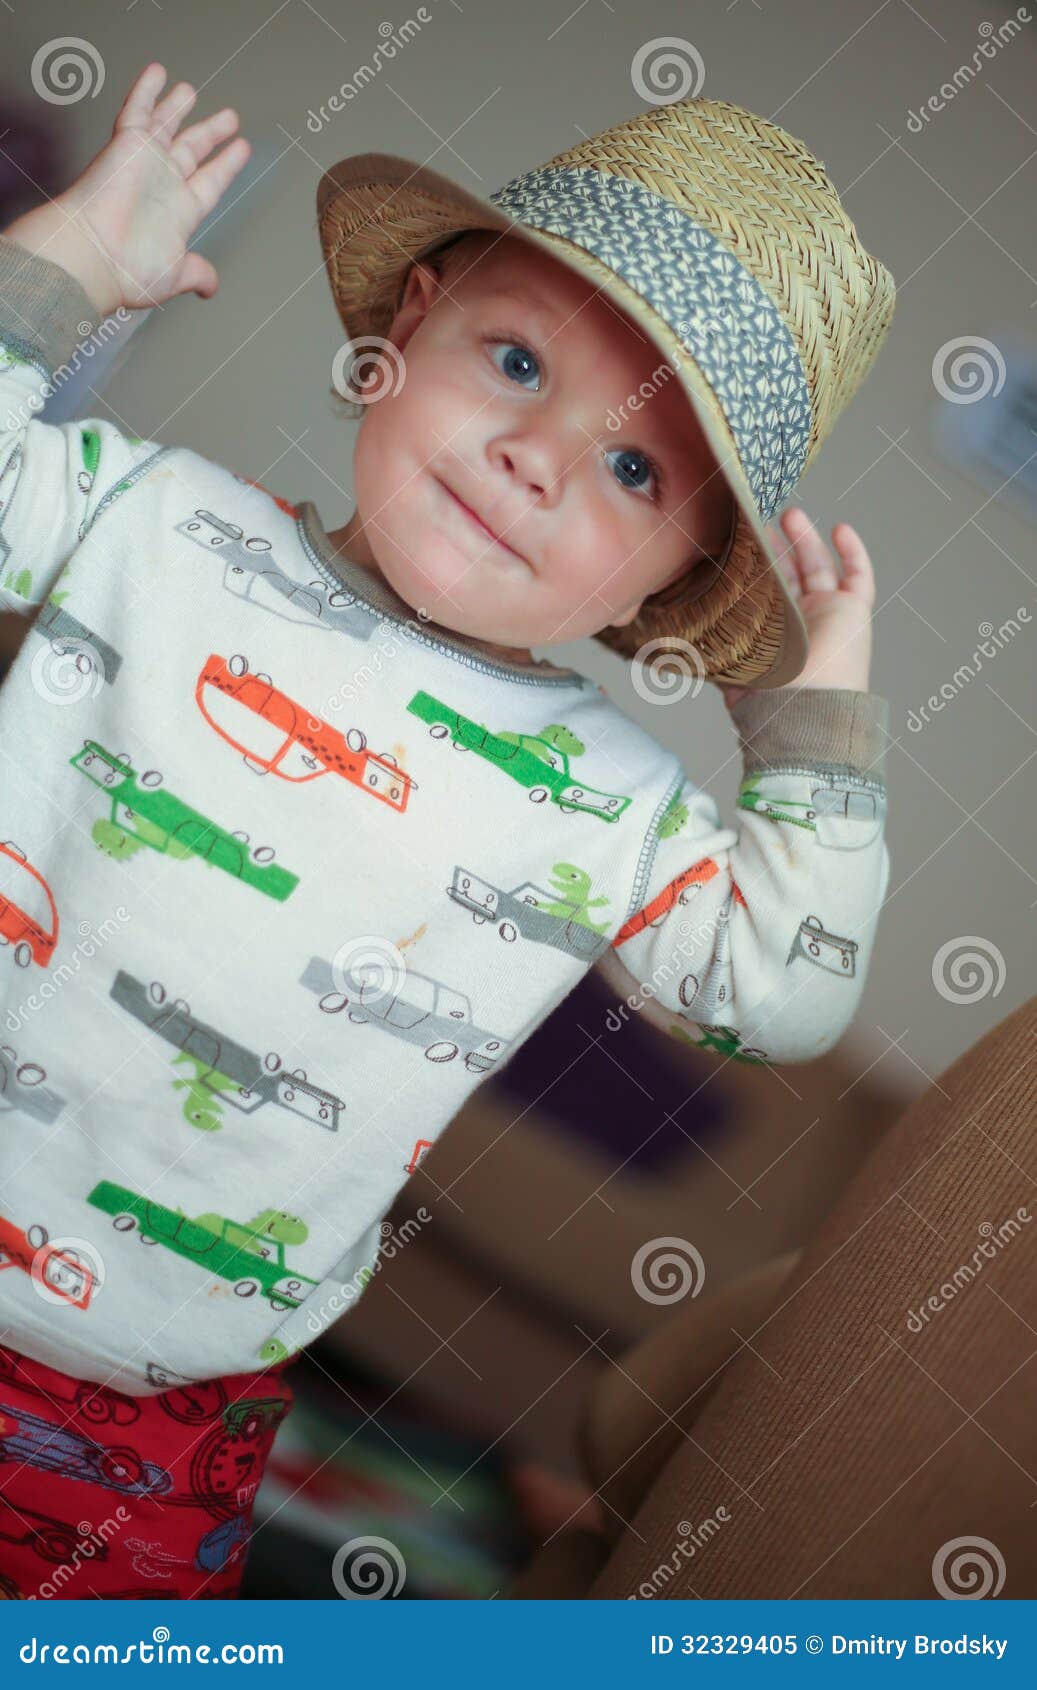 child wearing a fedora hat